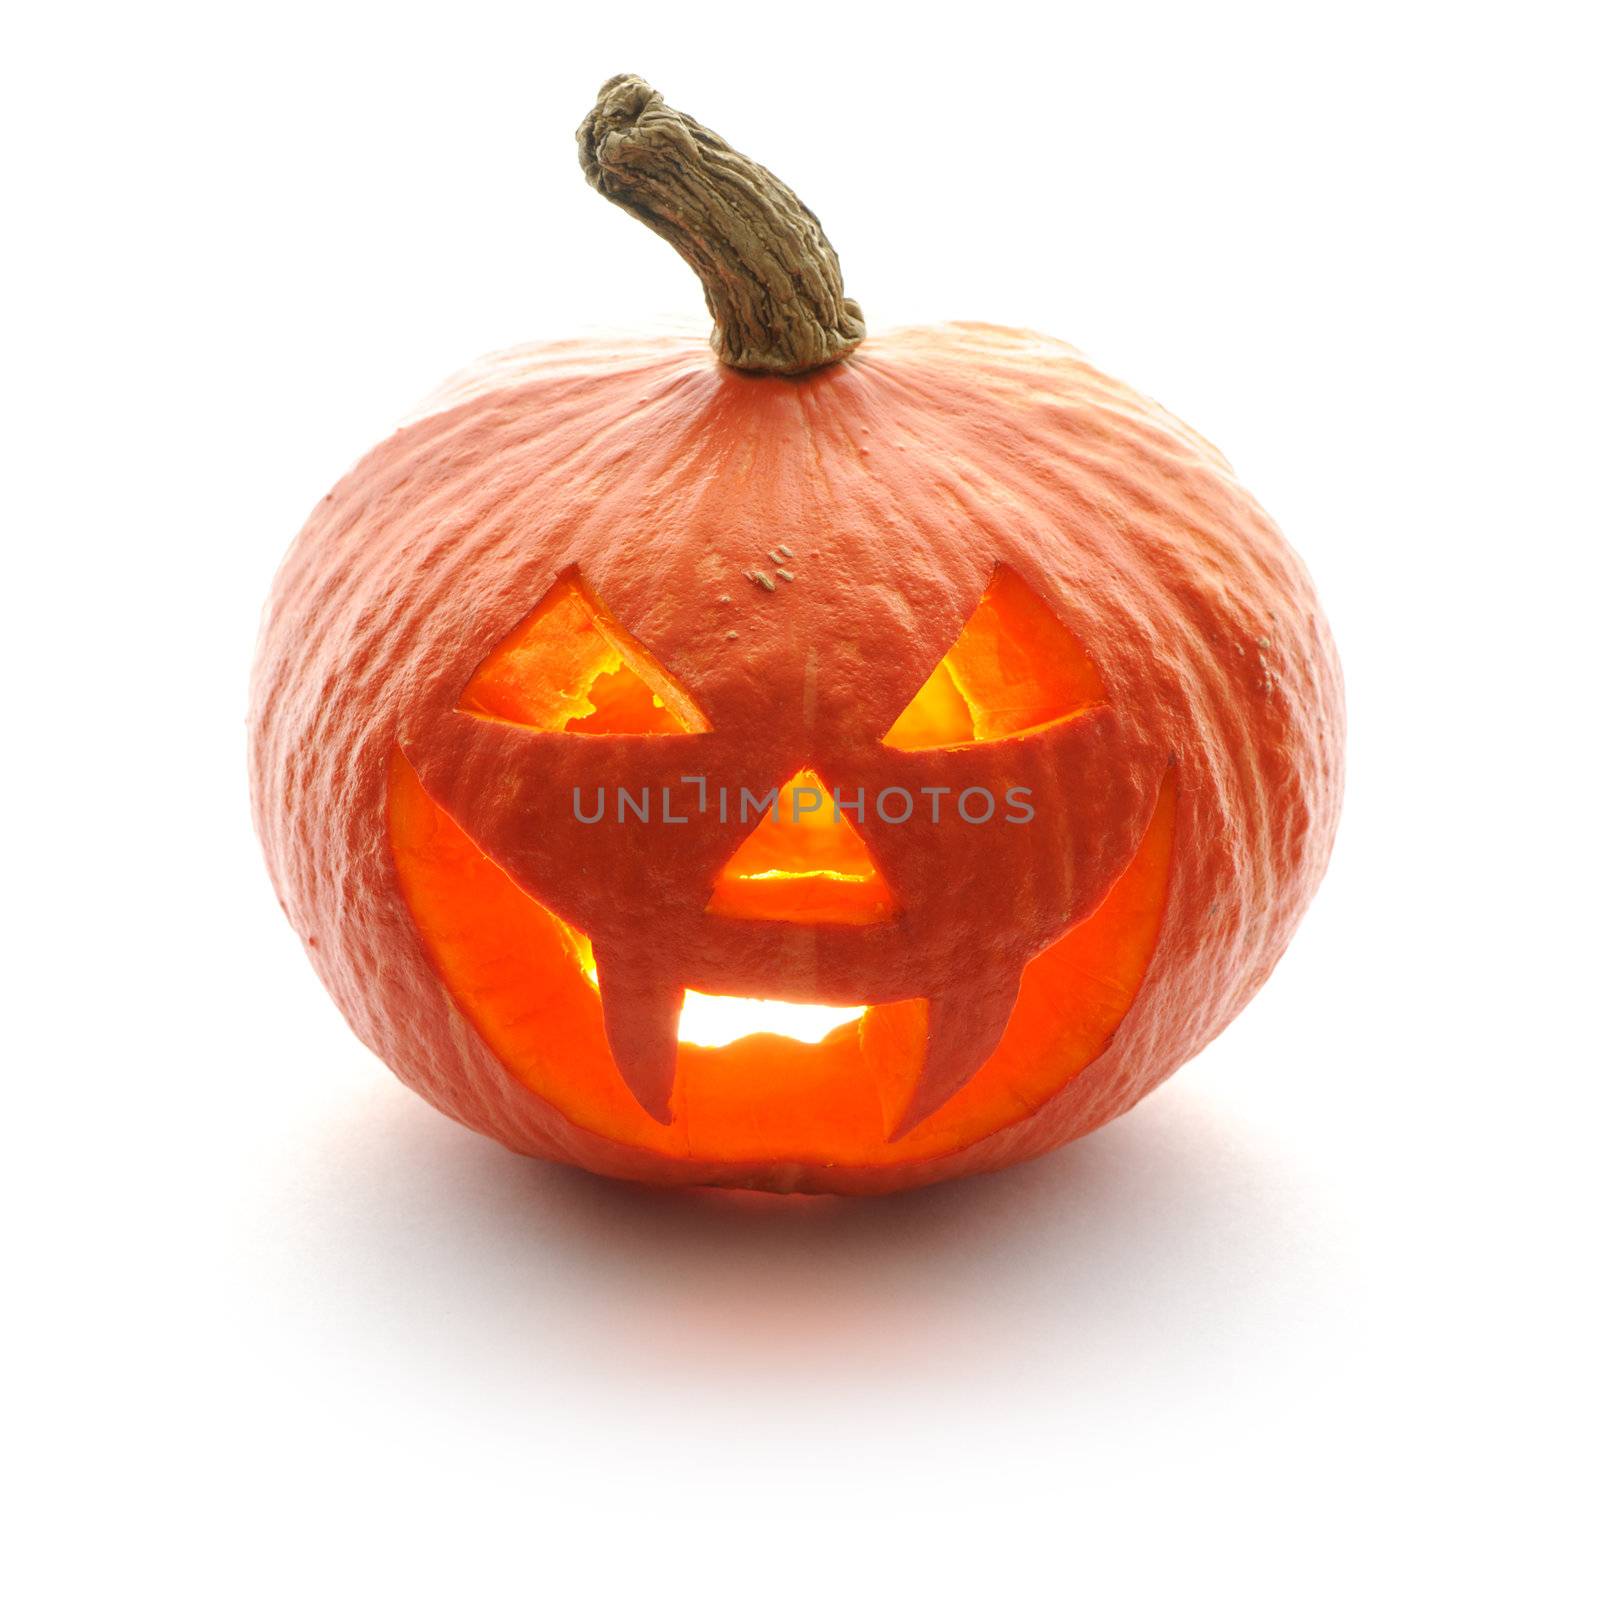 Halloween pumpkin Jack O'Lantern isolated on white